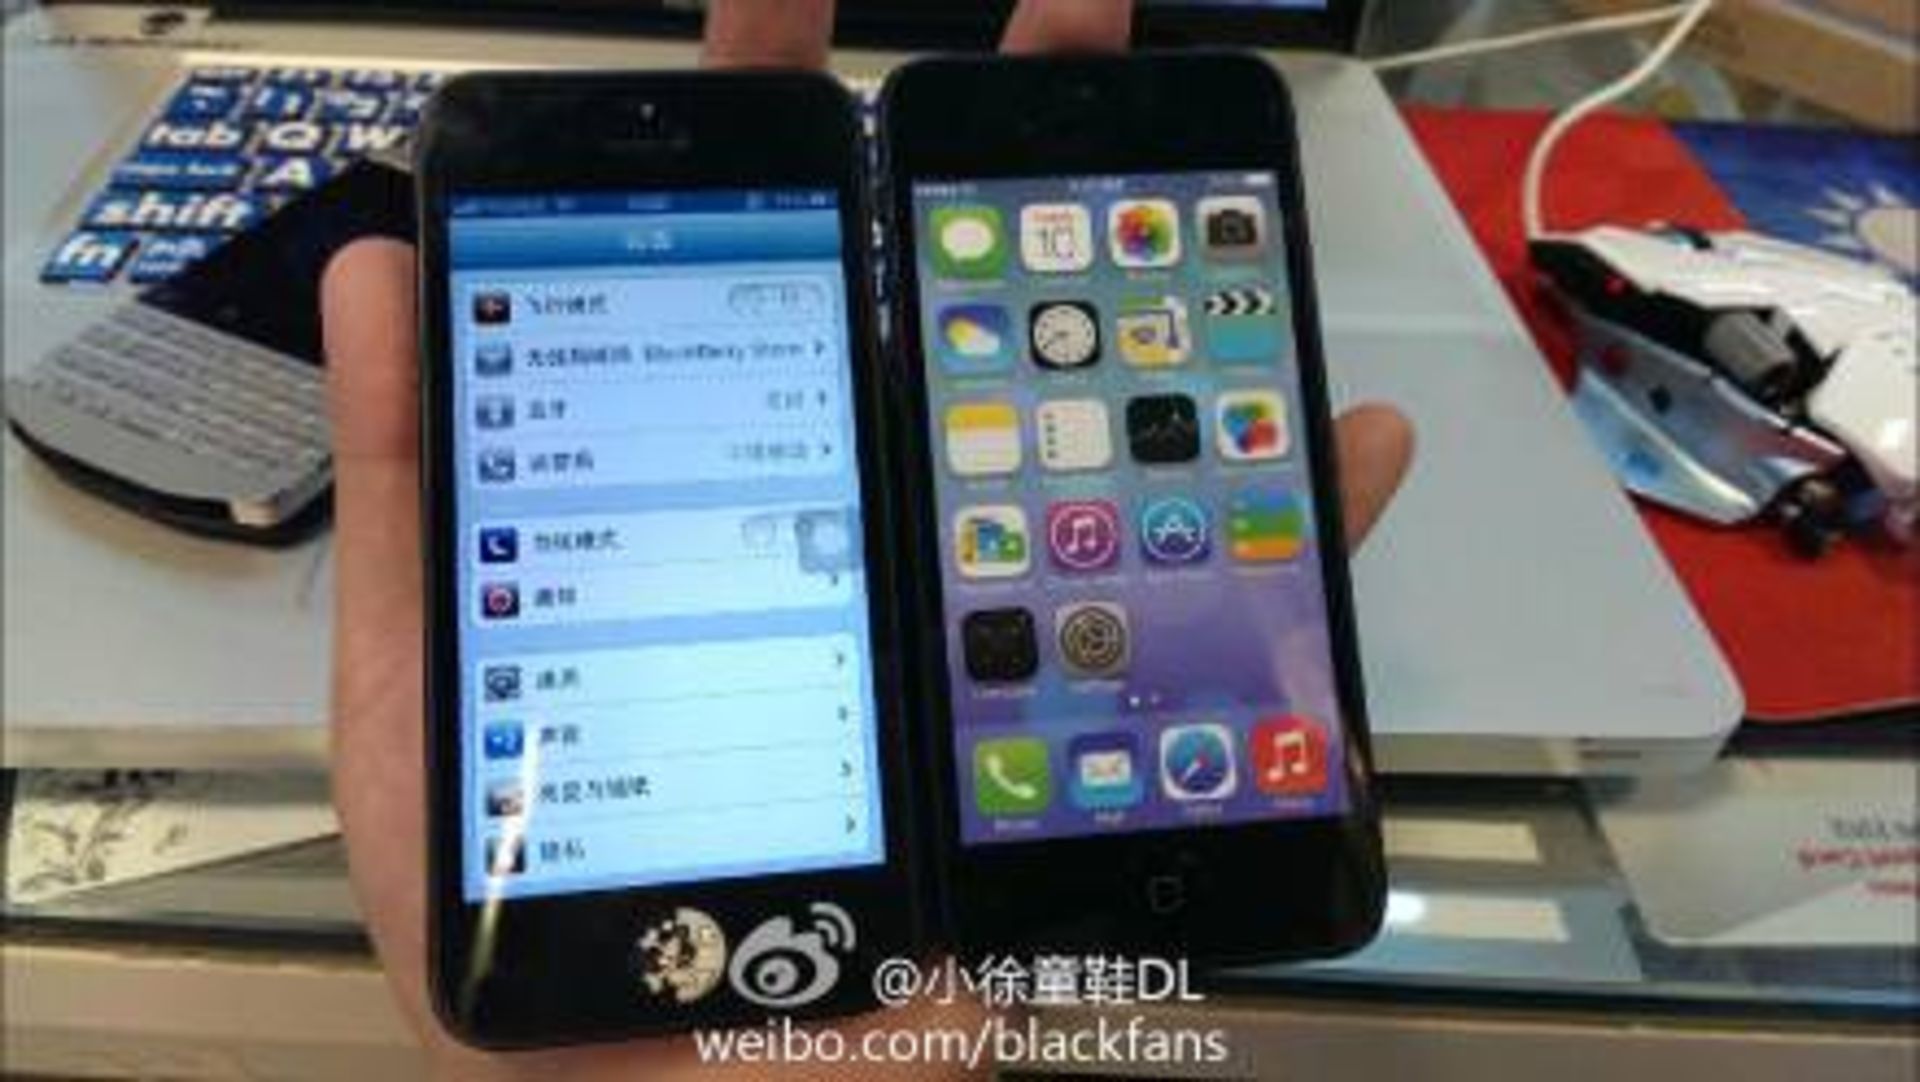 iphone-5s-5c-next-to-iphone5-3